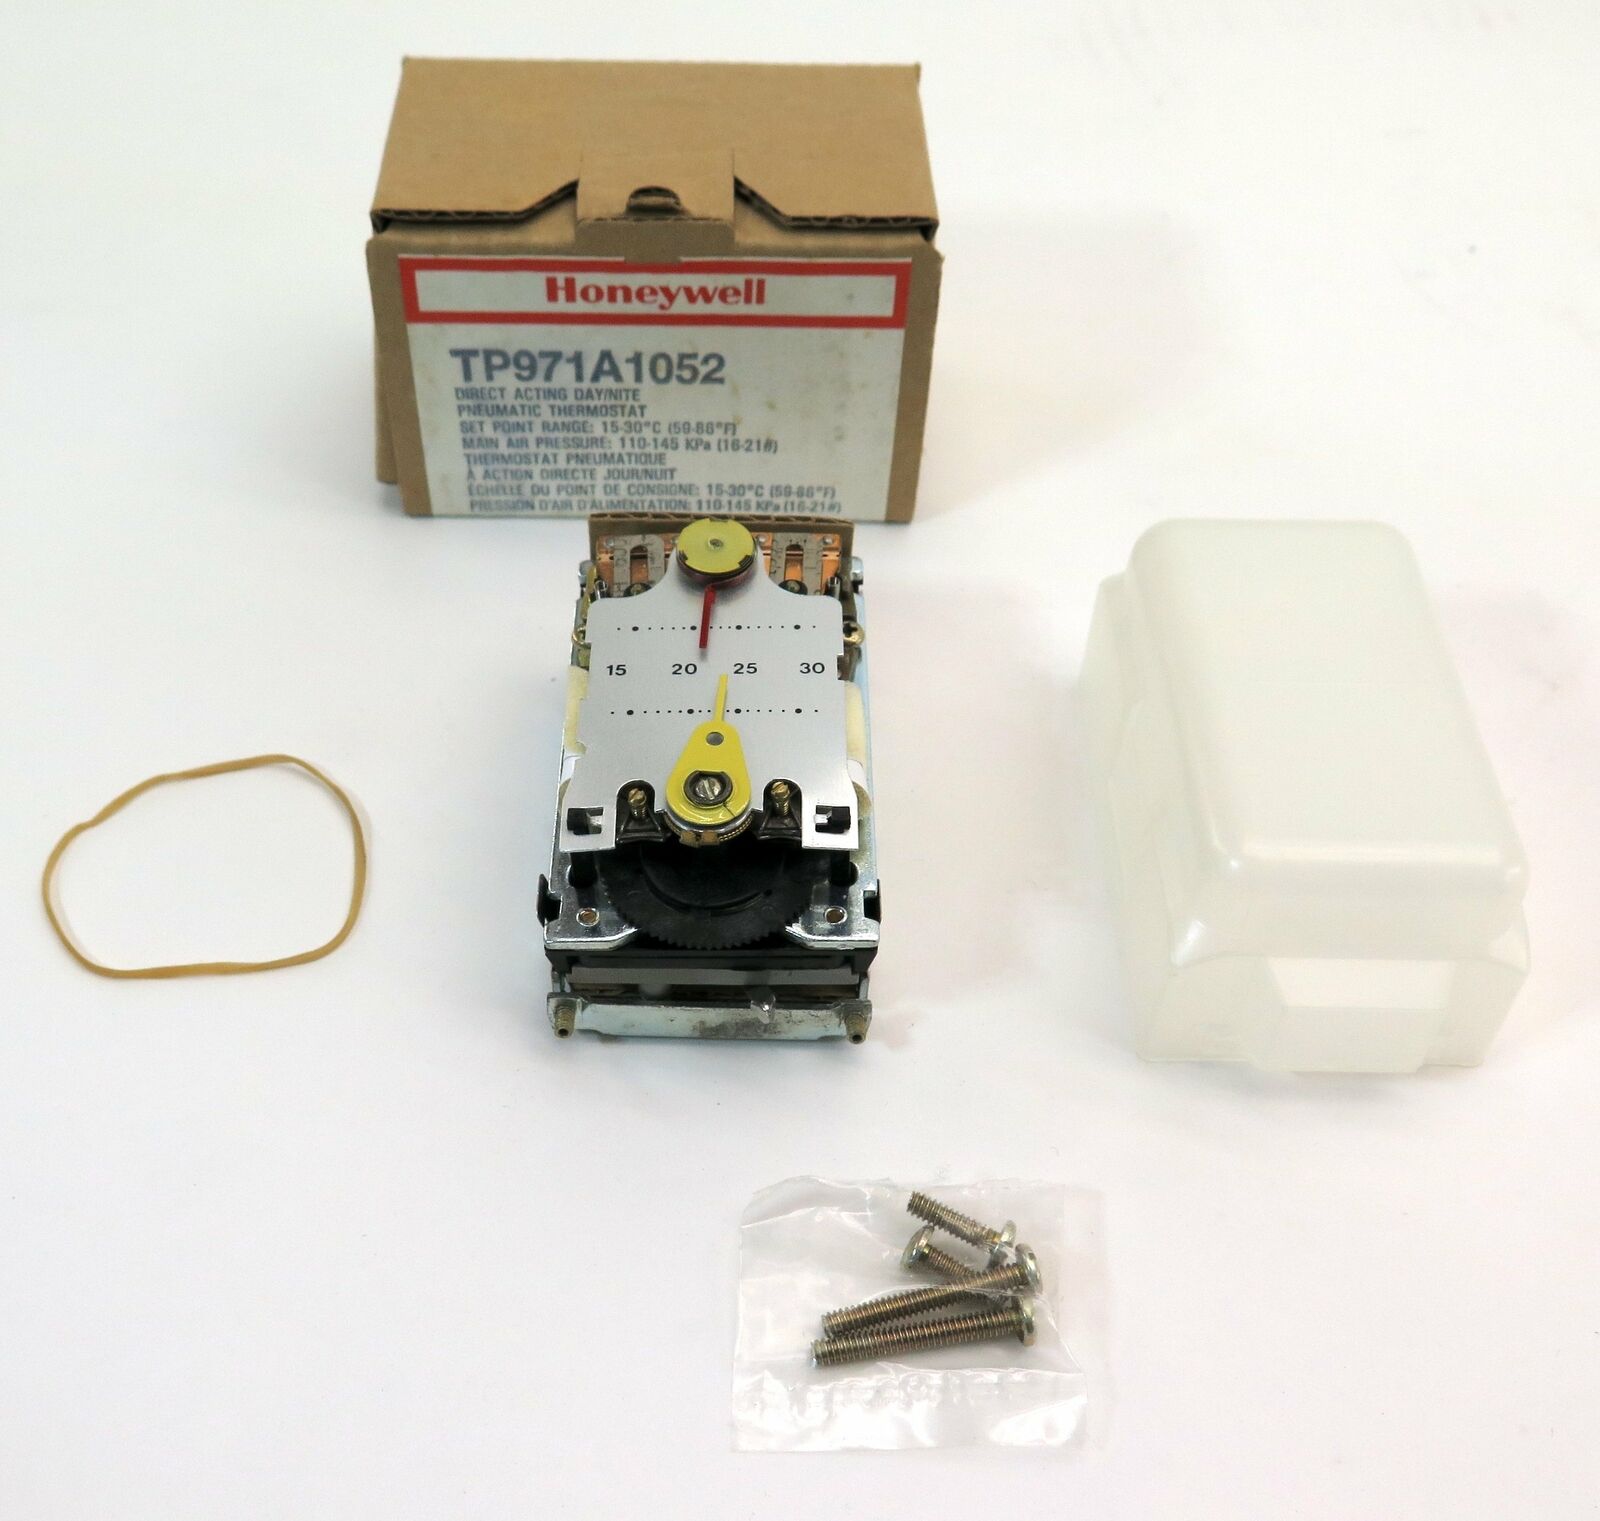 Honeywell TP971A1052 Pneumatic Thermostat Reverse Acting Range 15-30C